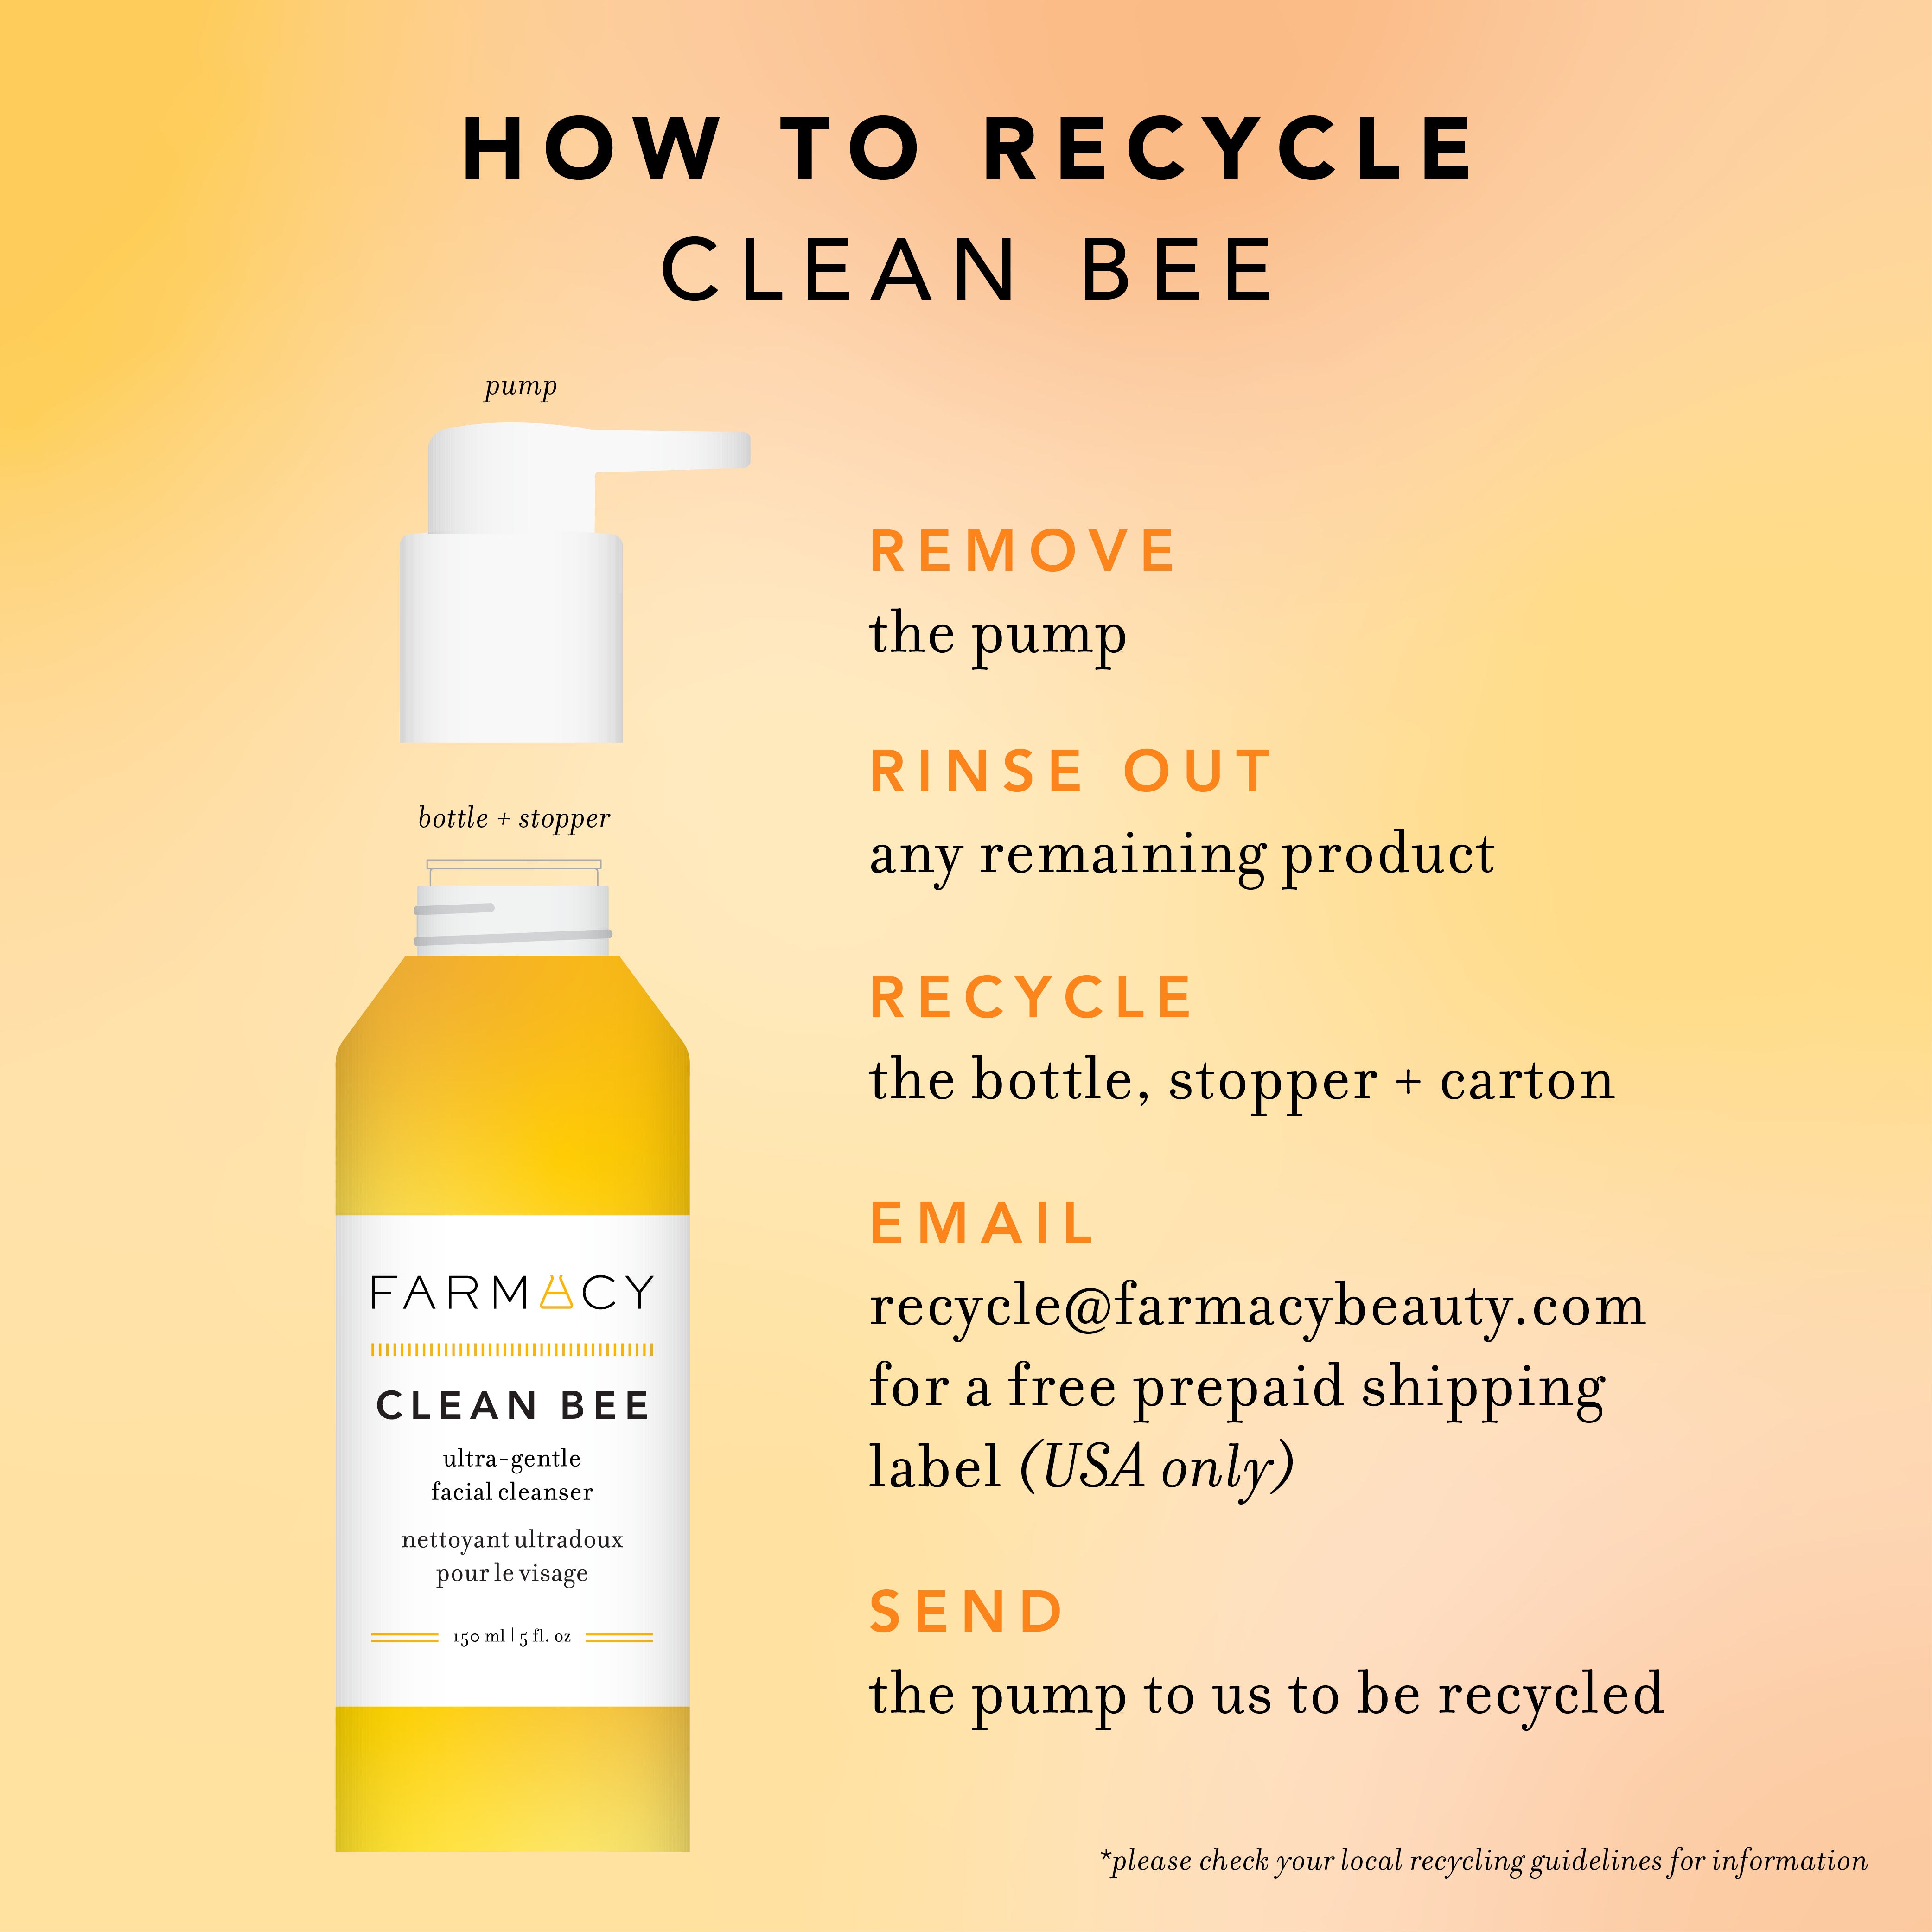 CLEAN BEE